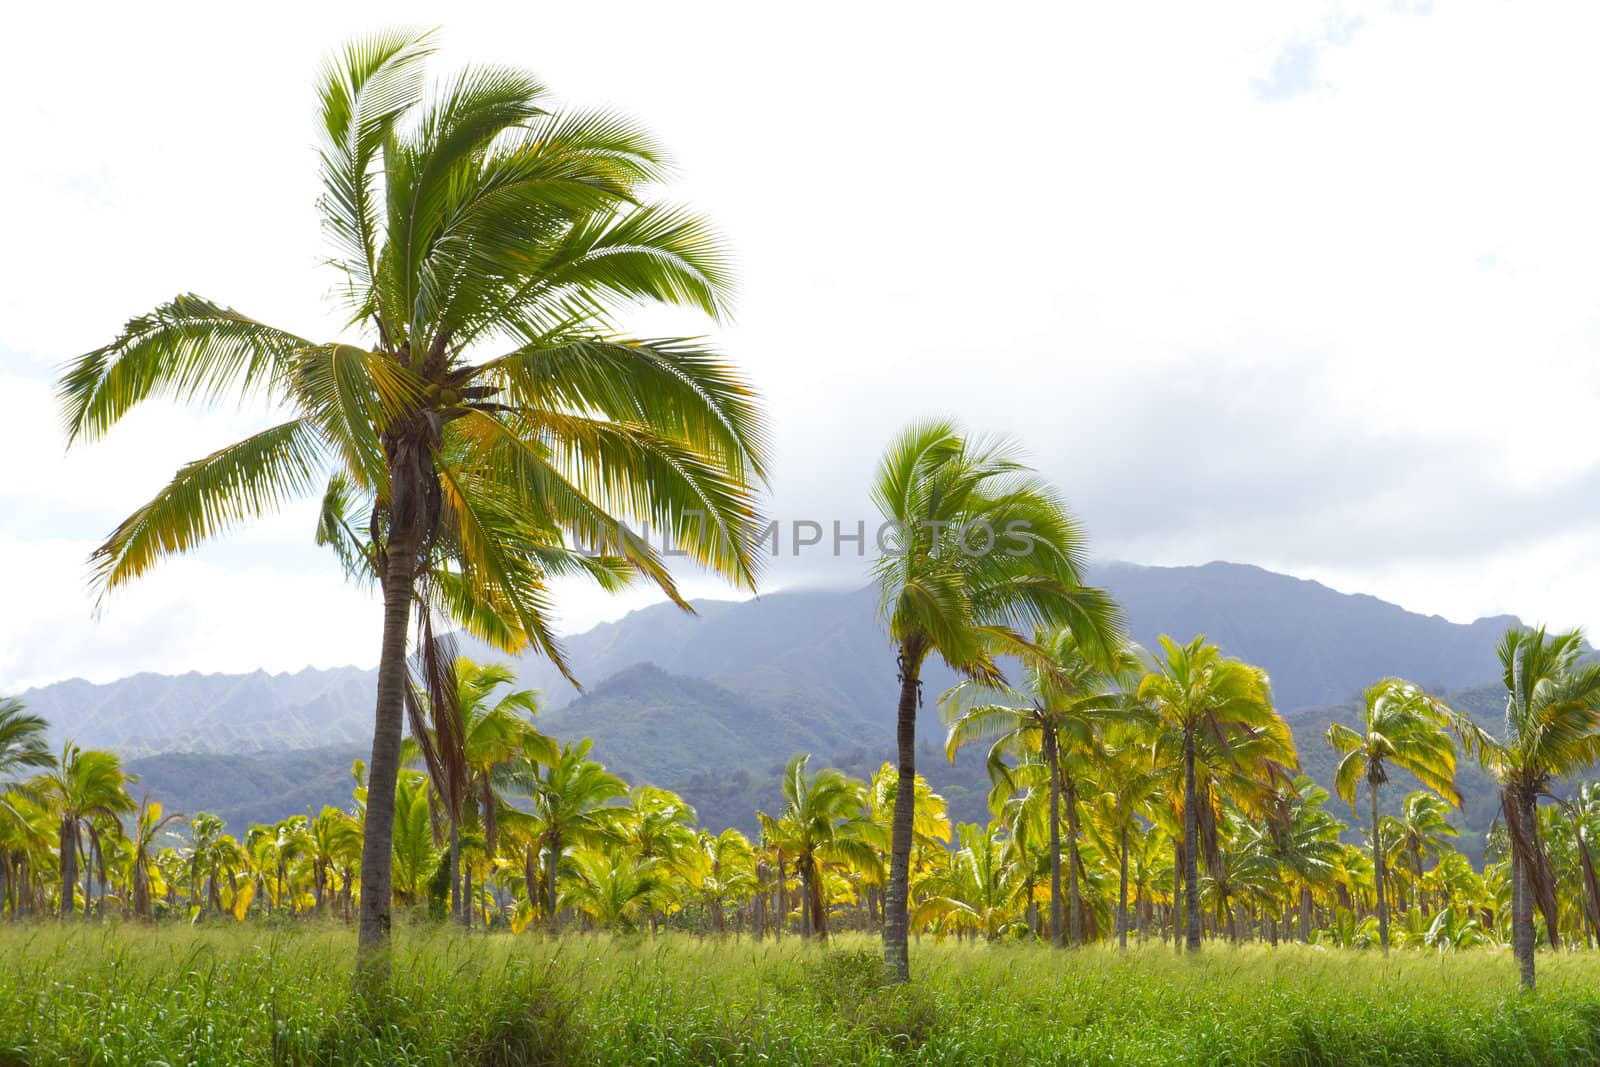 Hawaii Palm Tree Coconut Farm by joshuaraineyphotography